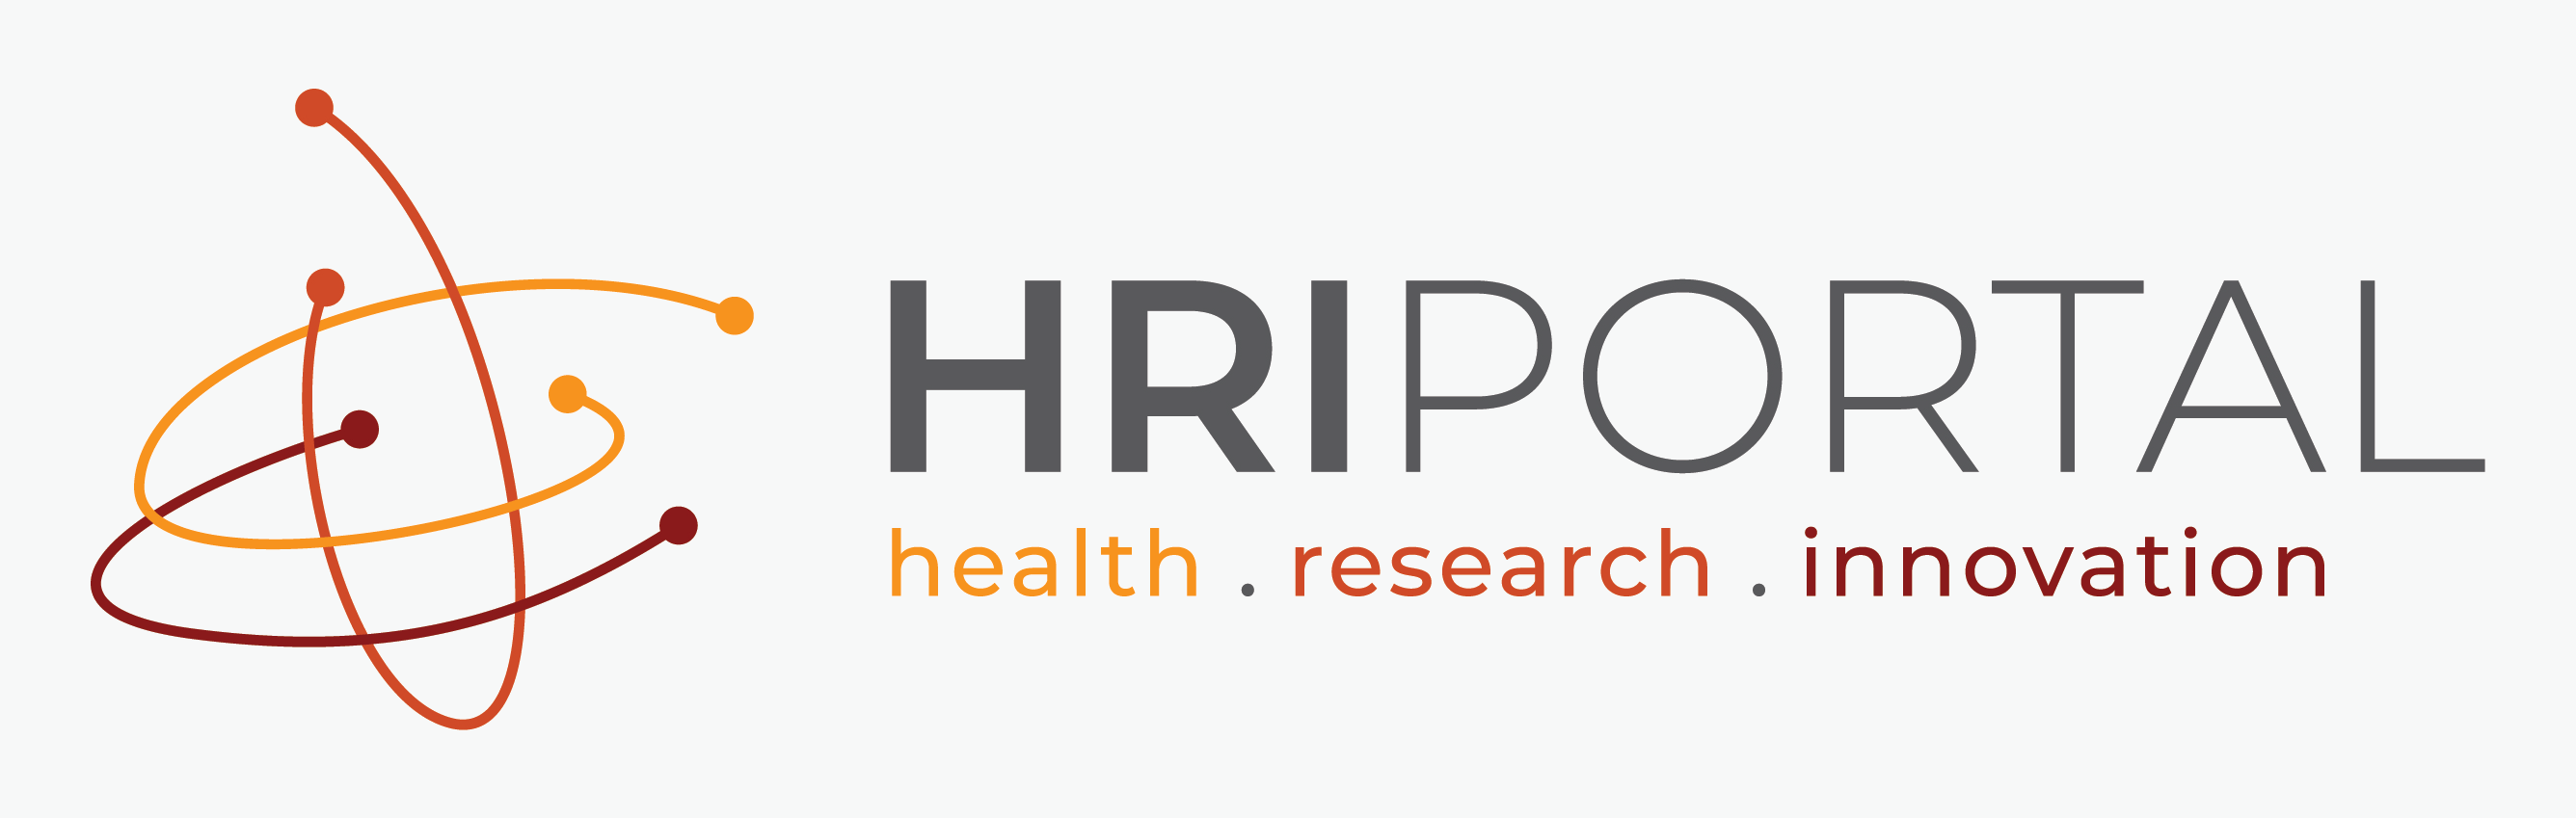 HRI Portal – health • research • innovation